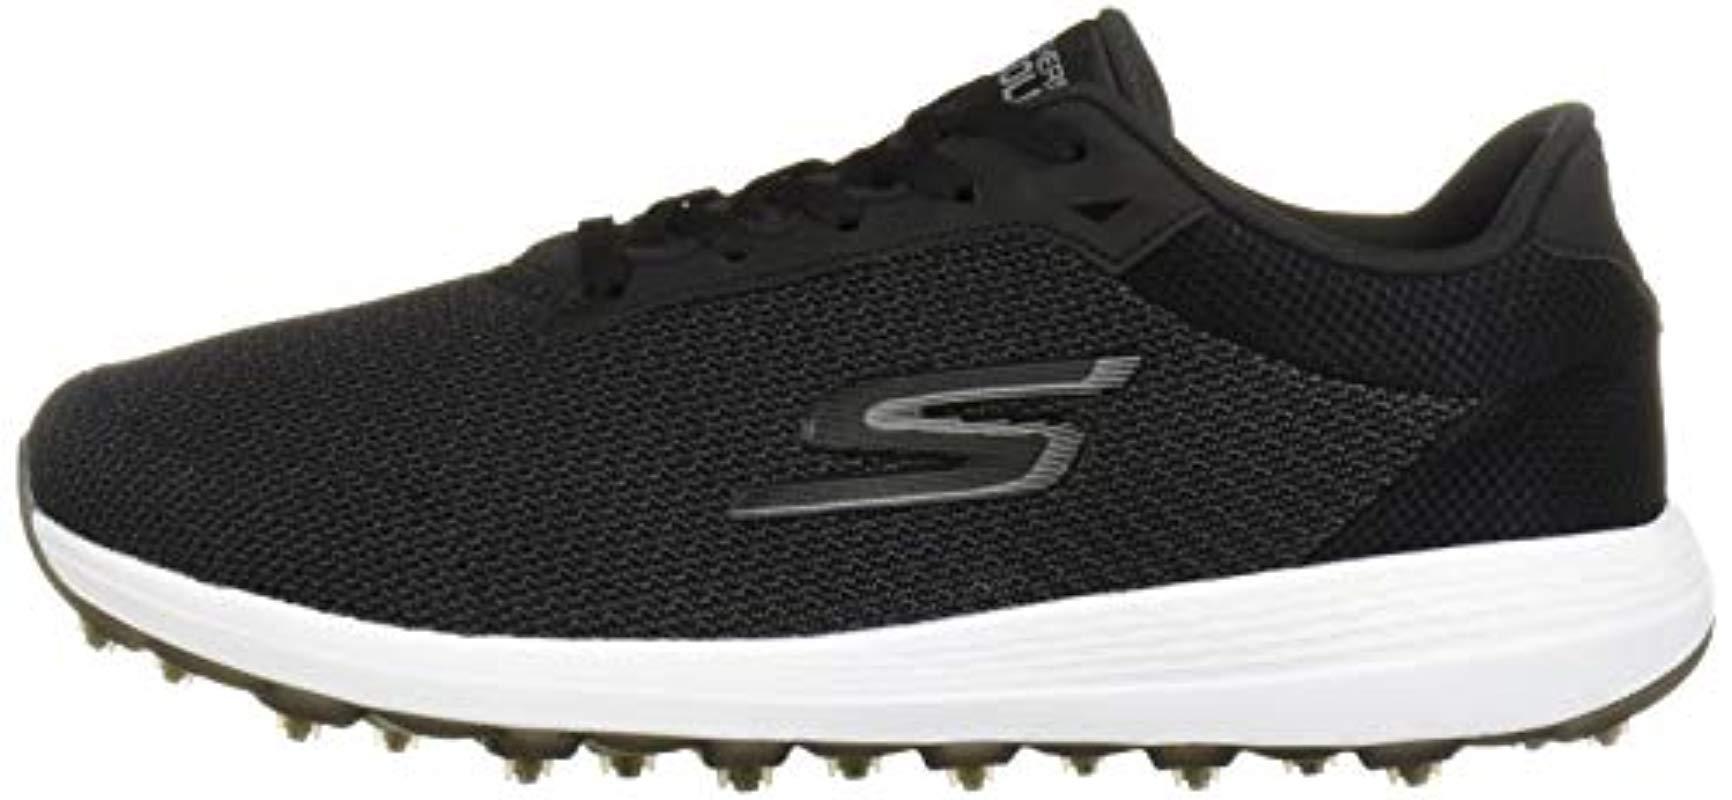 Skechers Max Fairway Spikeless Golf Shoe in Black for Men - Lyst